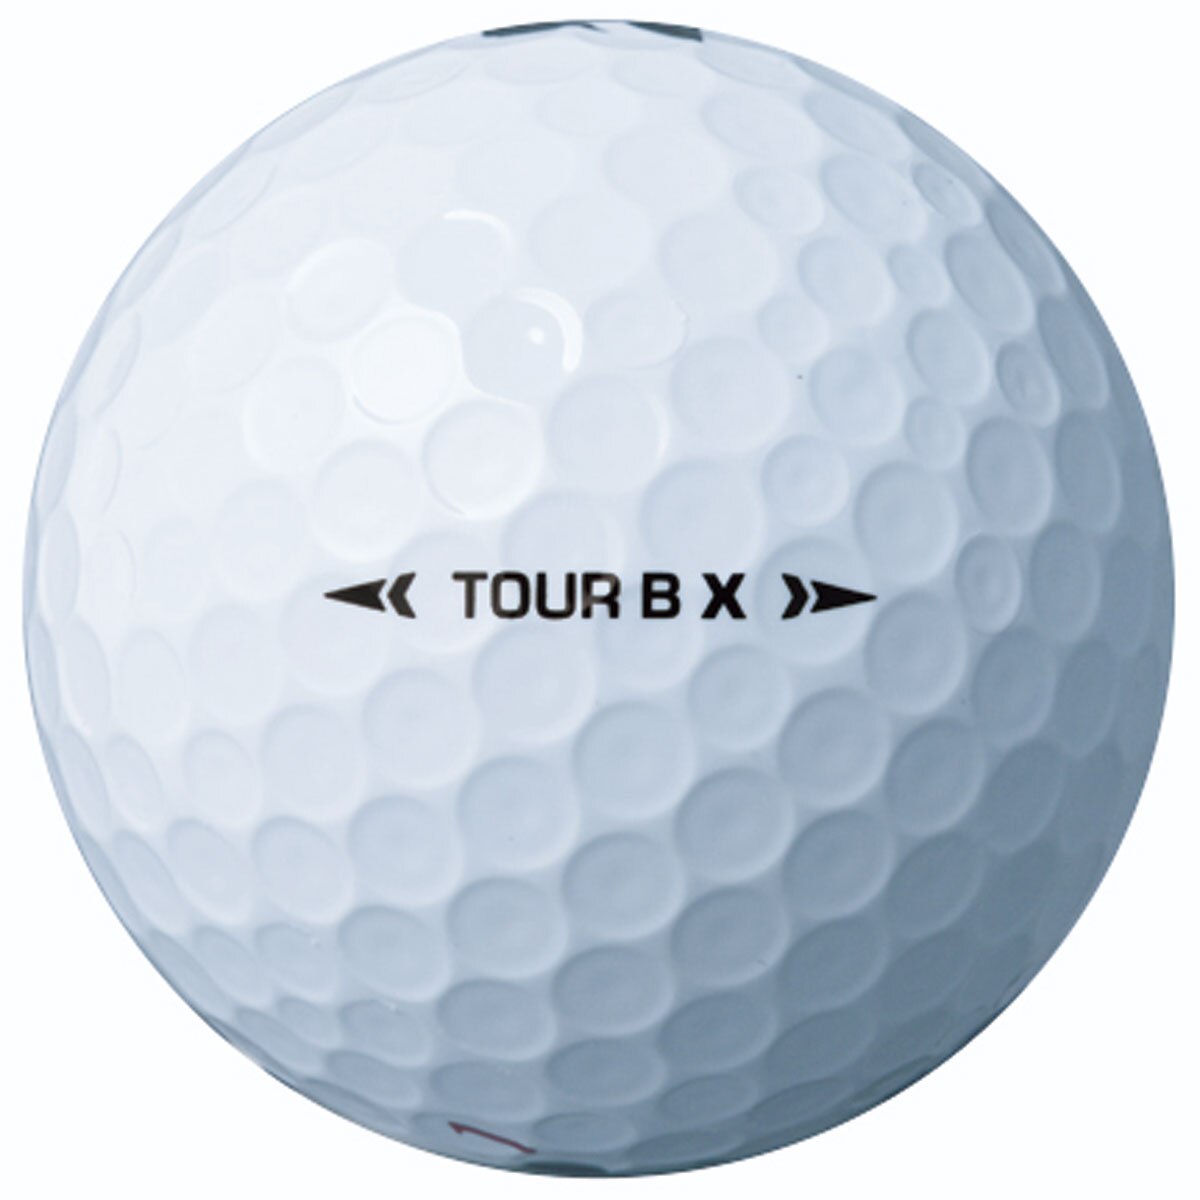 TOUR B X ボール(ゴルフボール)